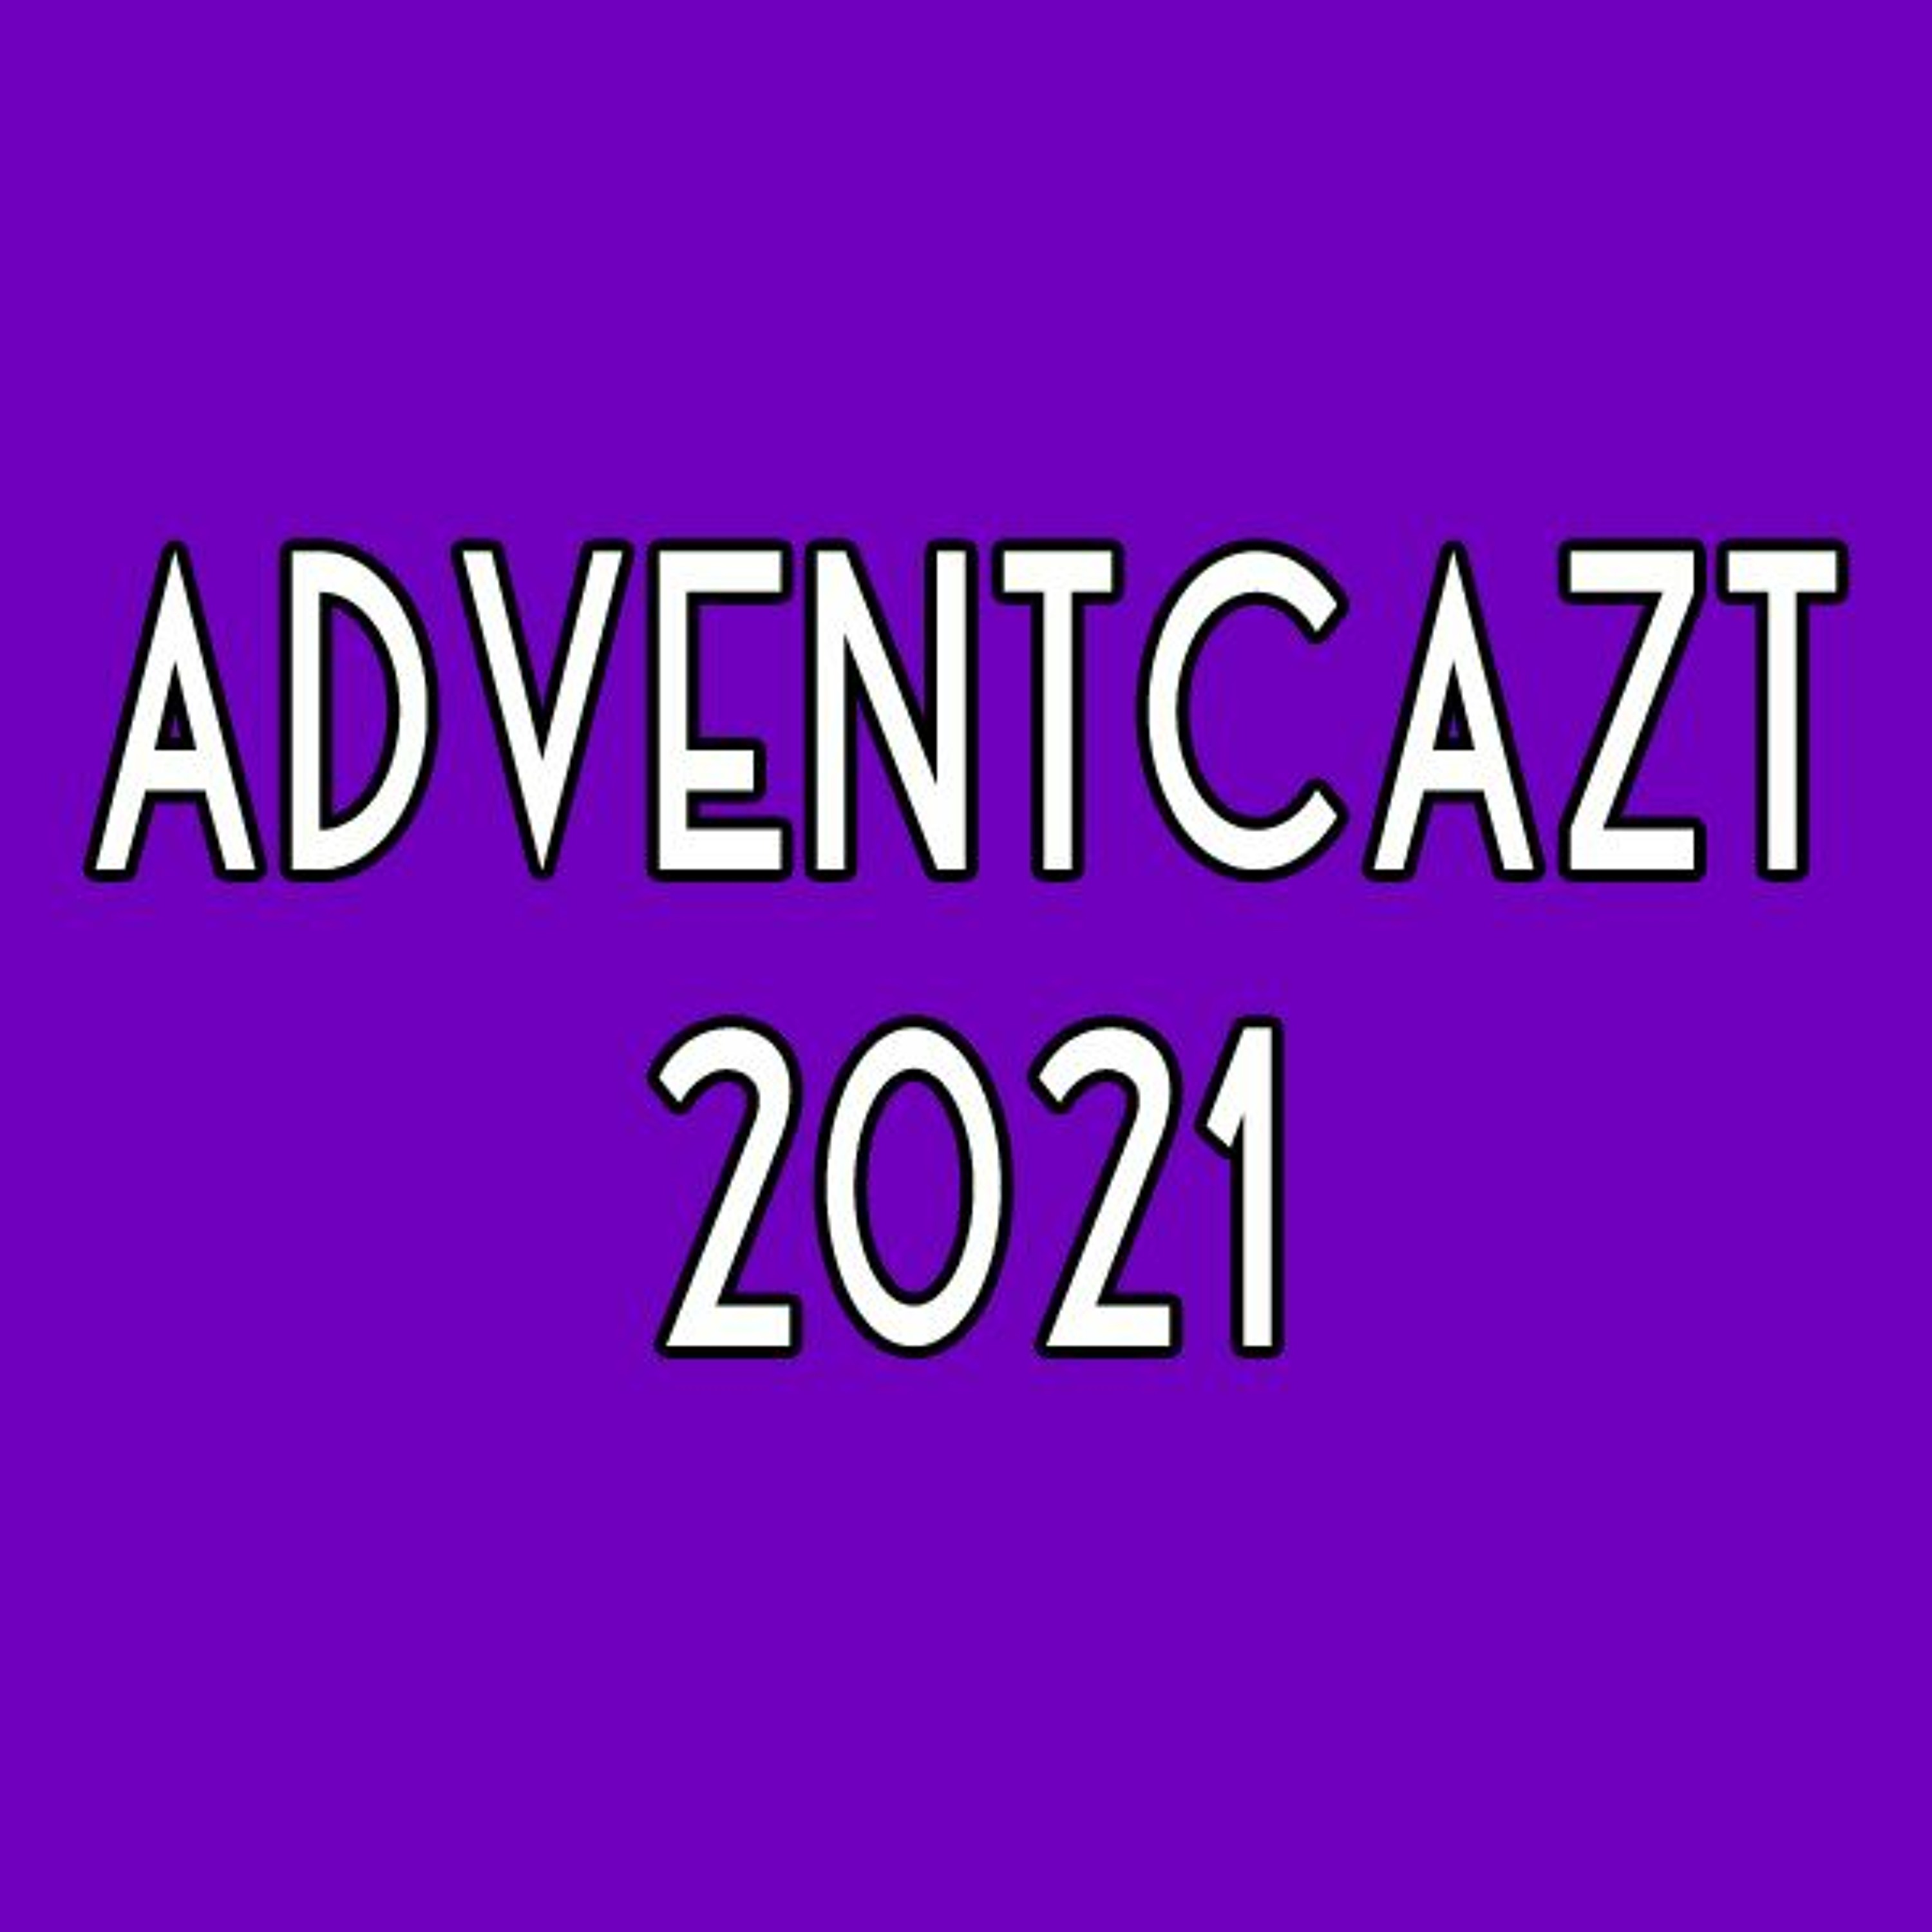 ADVENTCAzT 2021: 14 - 1st Sunday of Advent